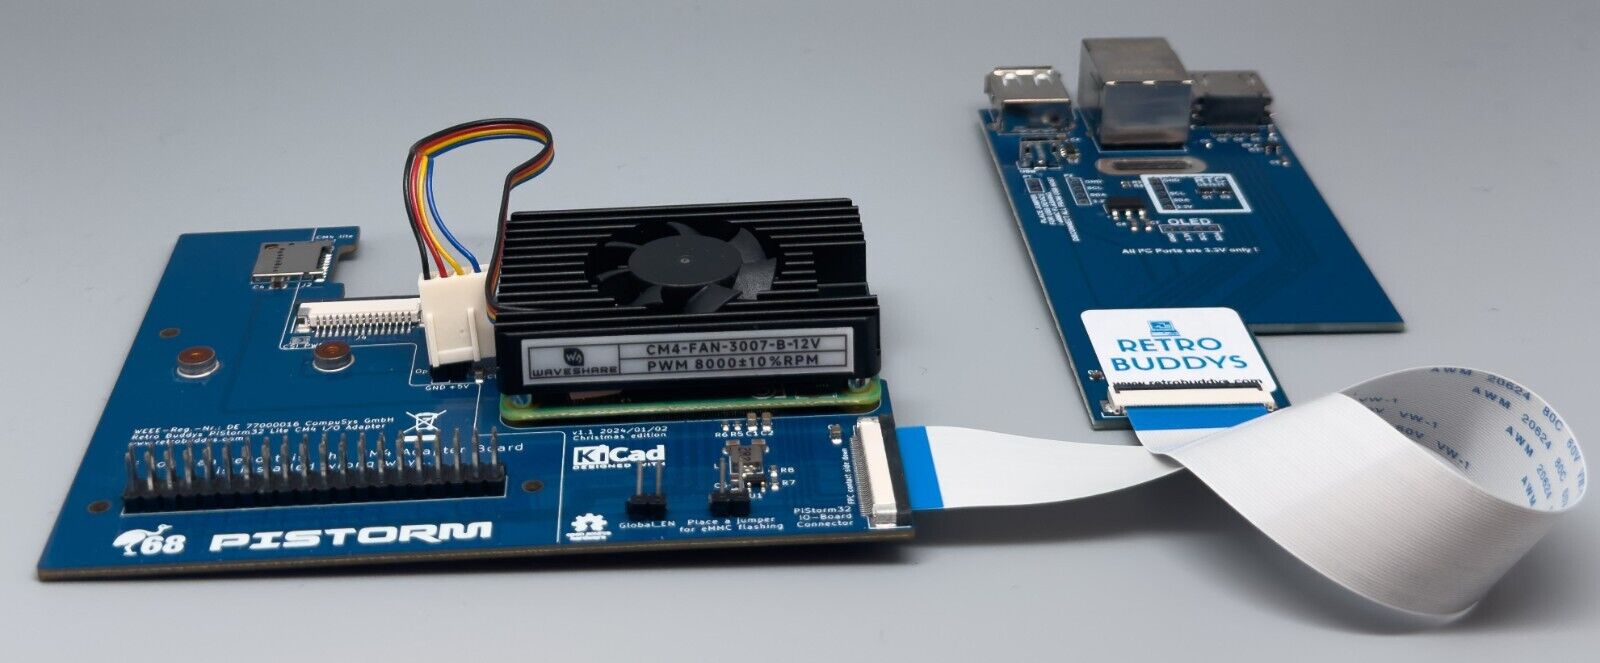 PiStorm32 CM4 IO Board mit Raspi CM4 2GB, WiFi und Kühler